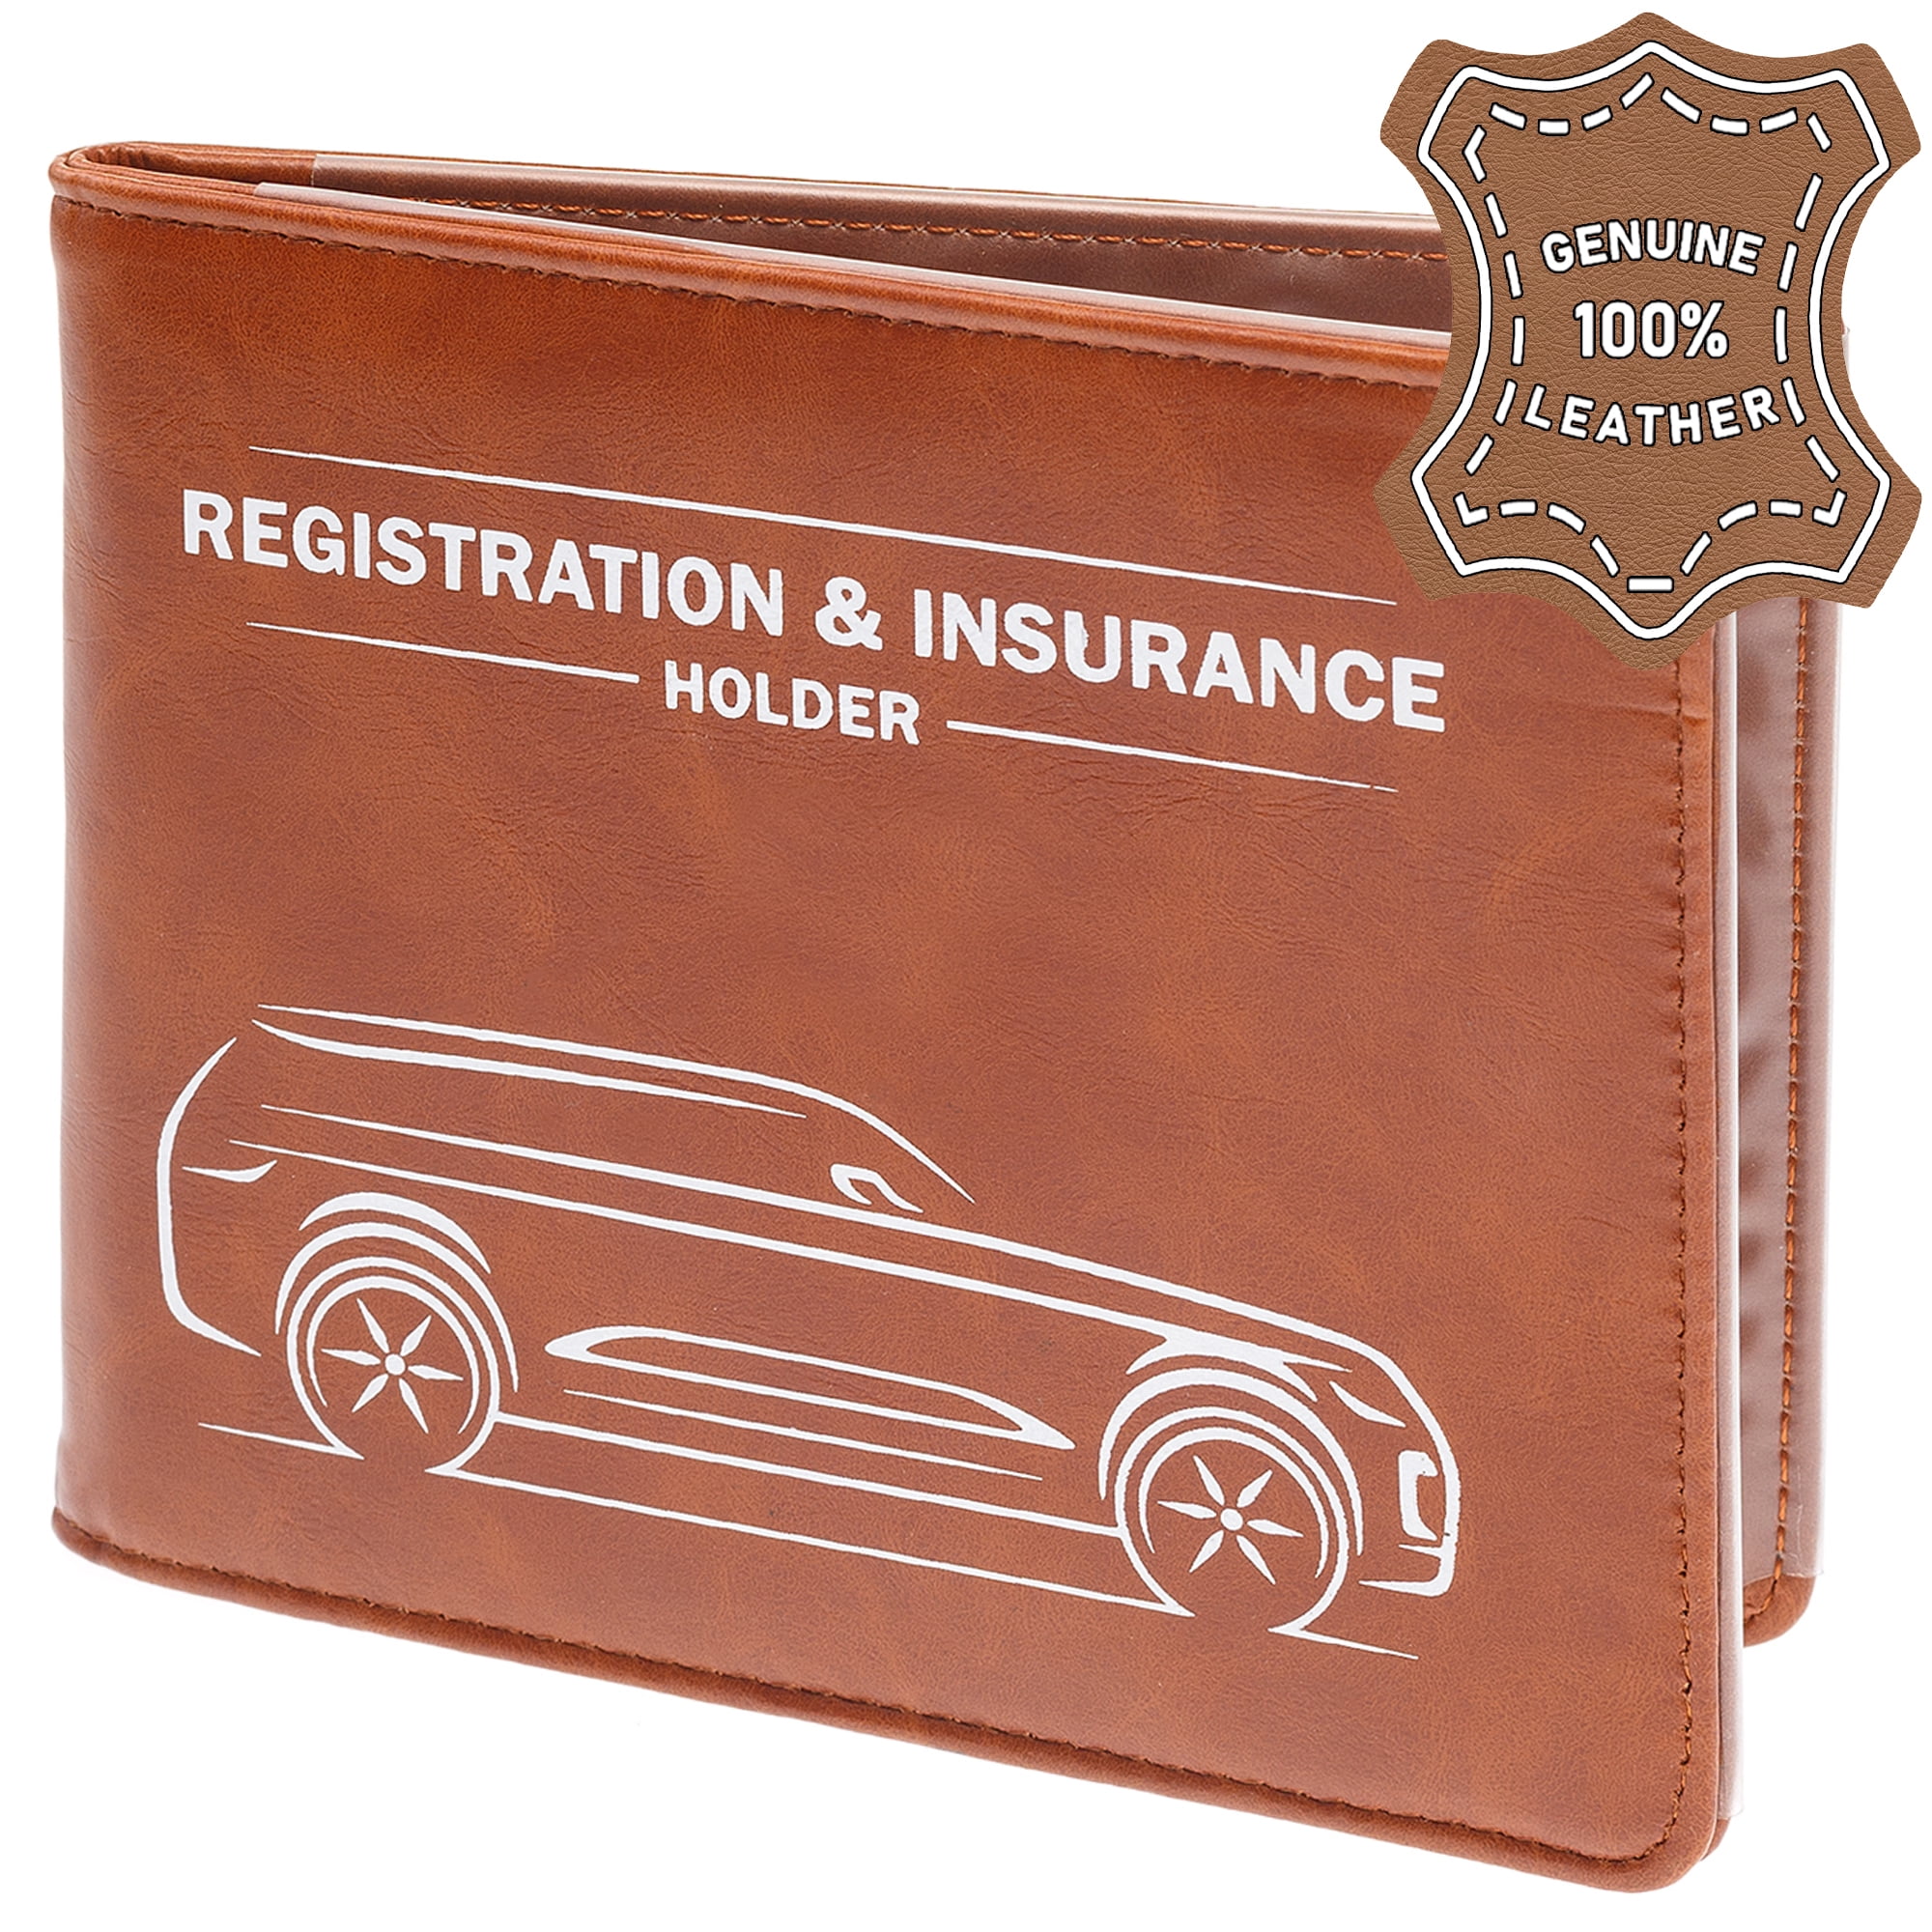 Auto Registration & Insurance Holder  